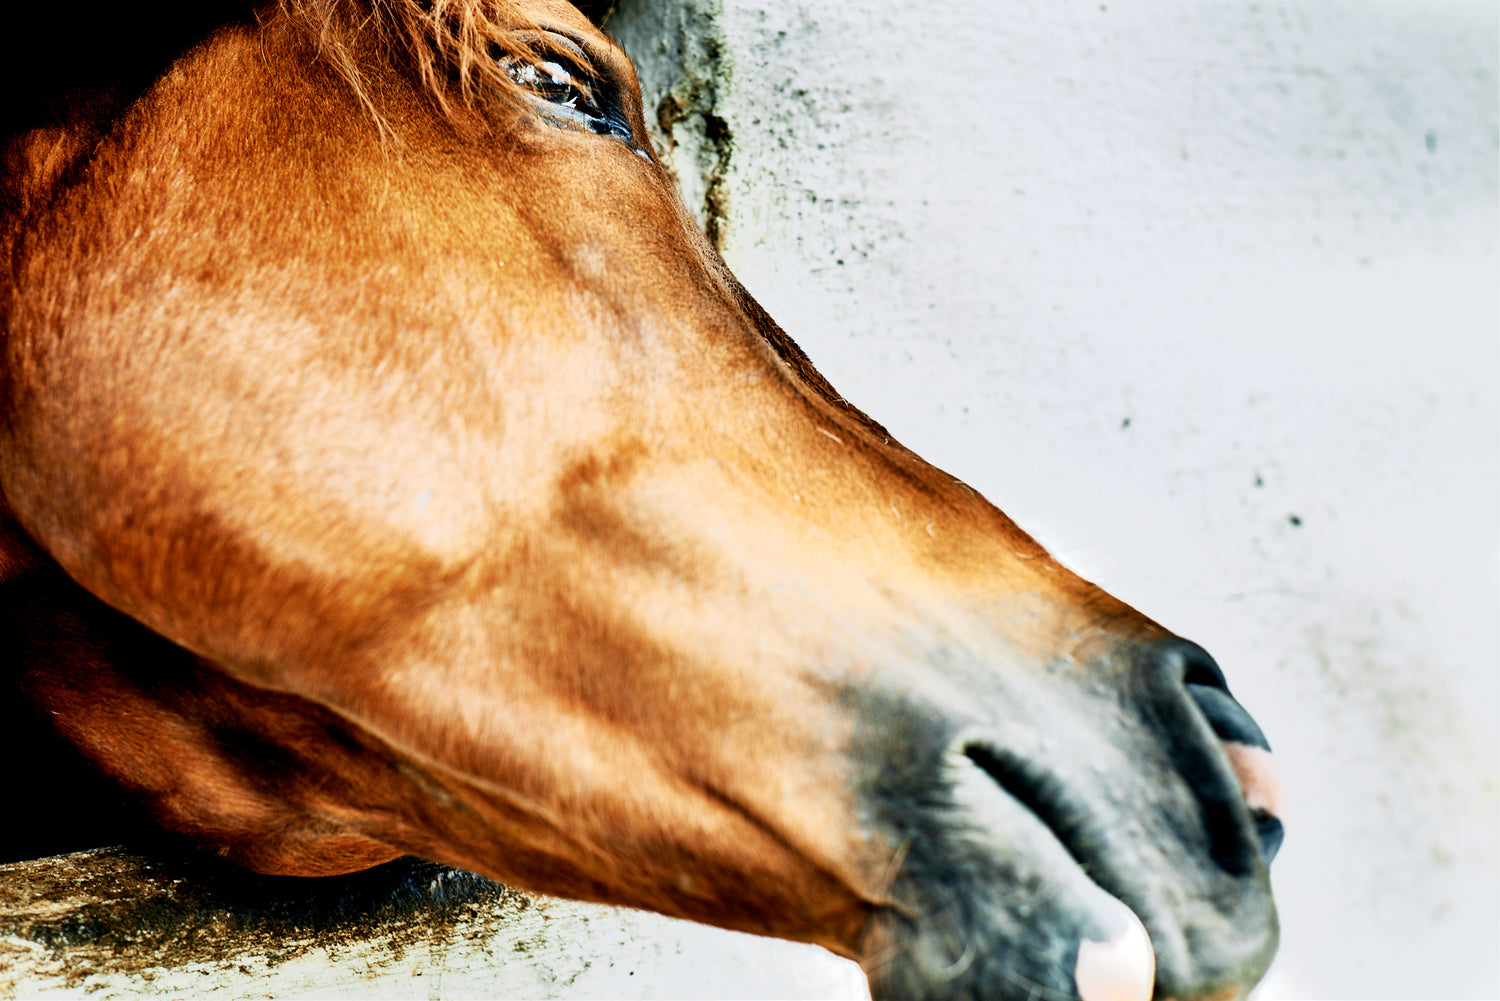 Equestrian Portraits: Majestic Horse Photography Showcase